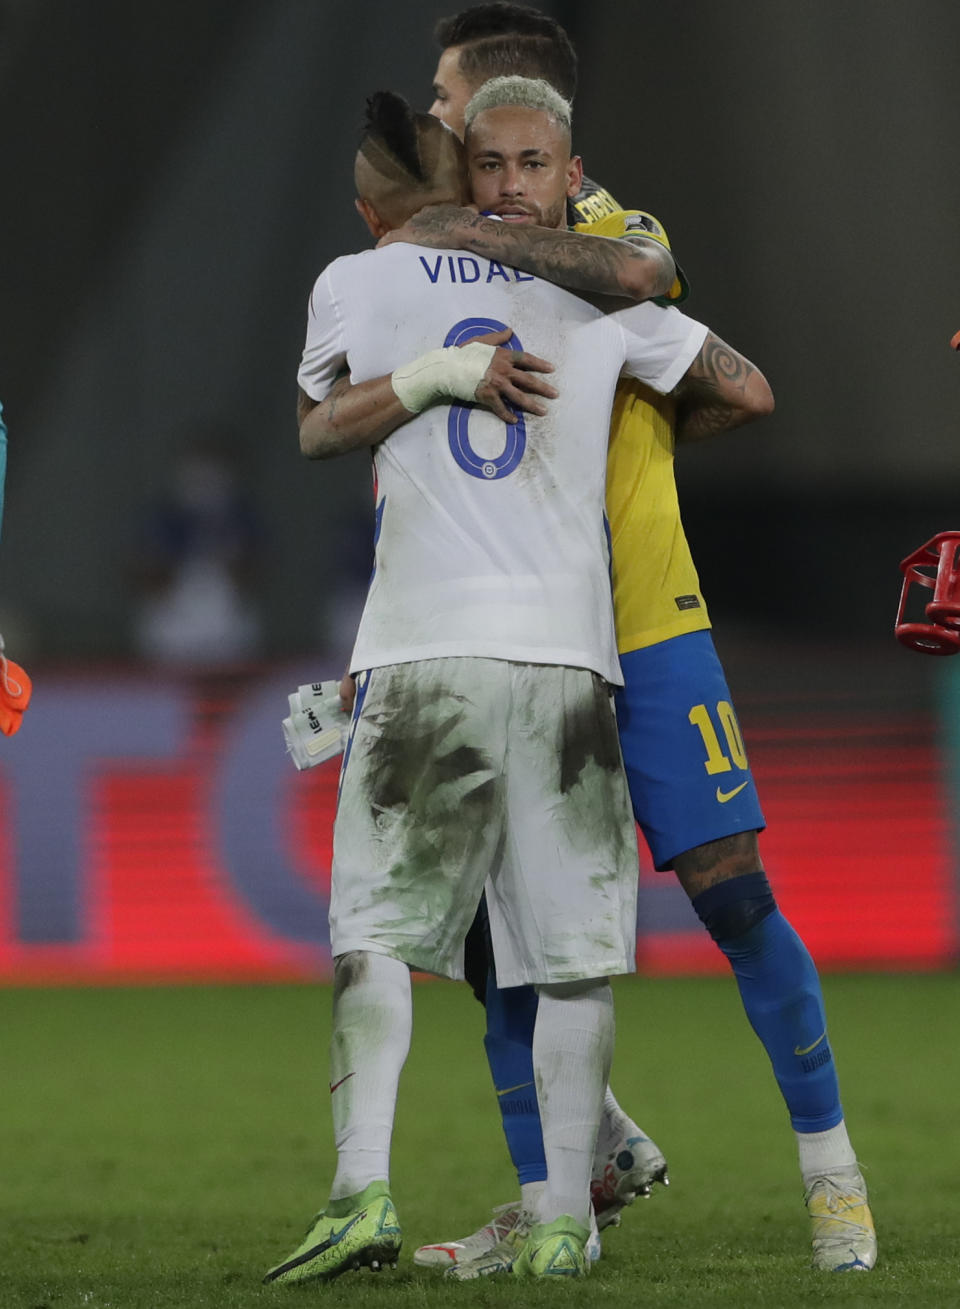 Chile's Arturo Vidal, 8, embraces Brazil's Neymar at the end of a Copa America quarterfinal soccer match at the Nilton Santos stadium in Rio de Janeiro, Brazil, Friday, July 2, 2021. Chile lost to Brazil 0-1. (AP Photo/Silvia Izquierdo)